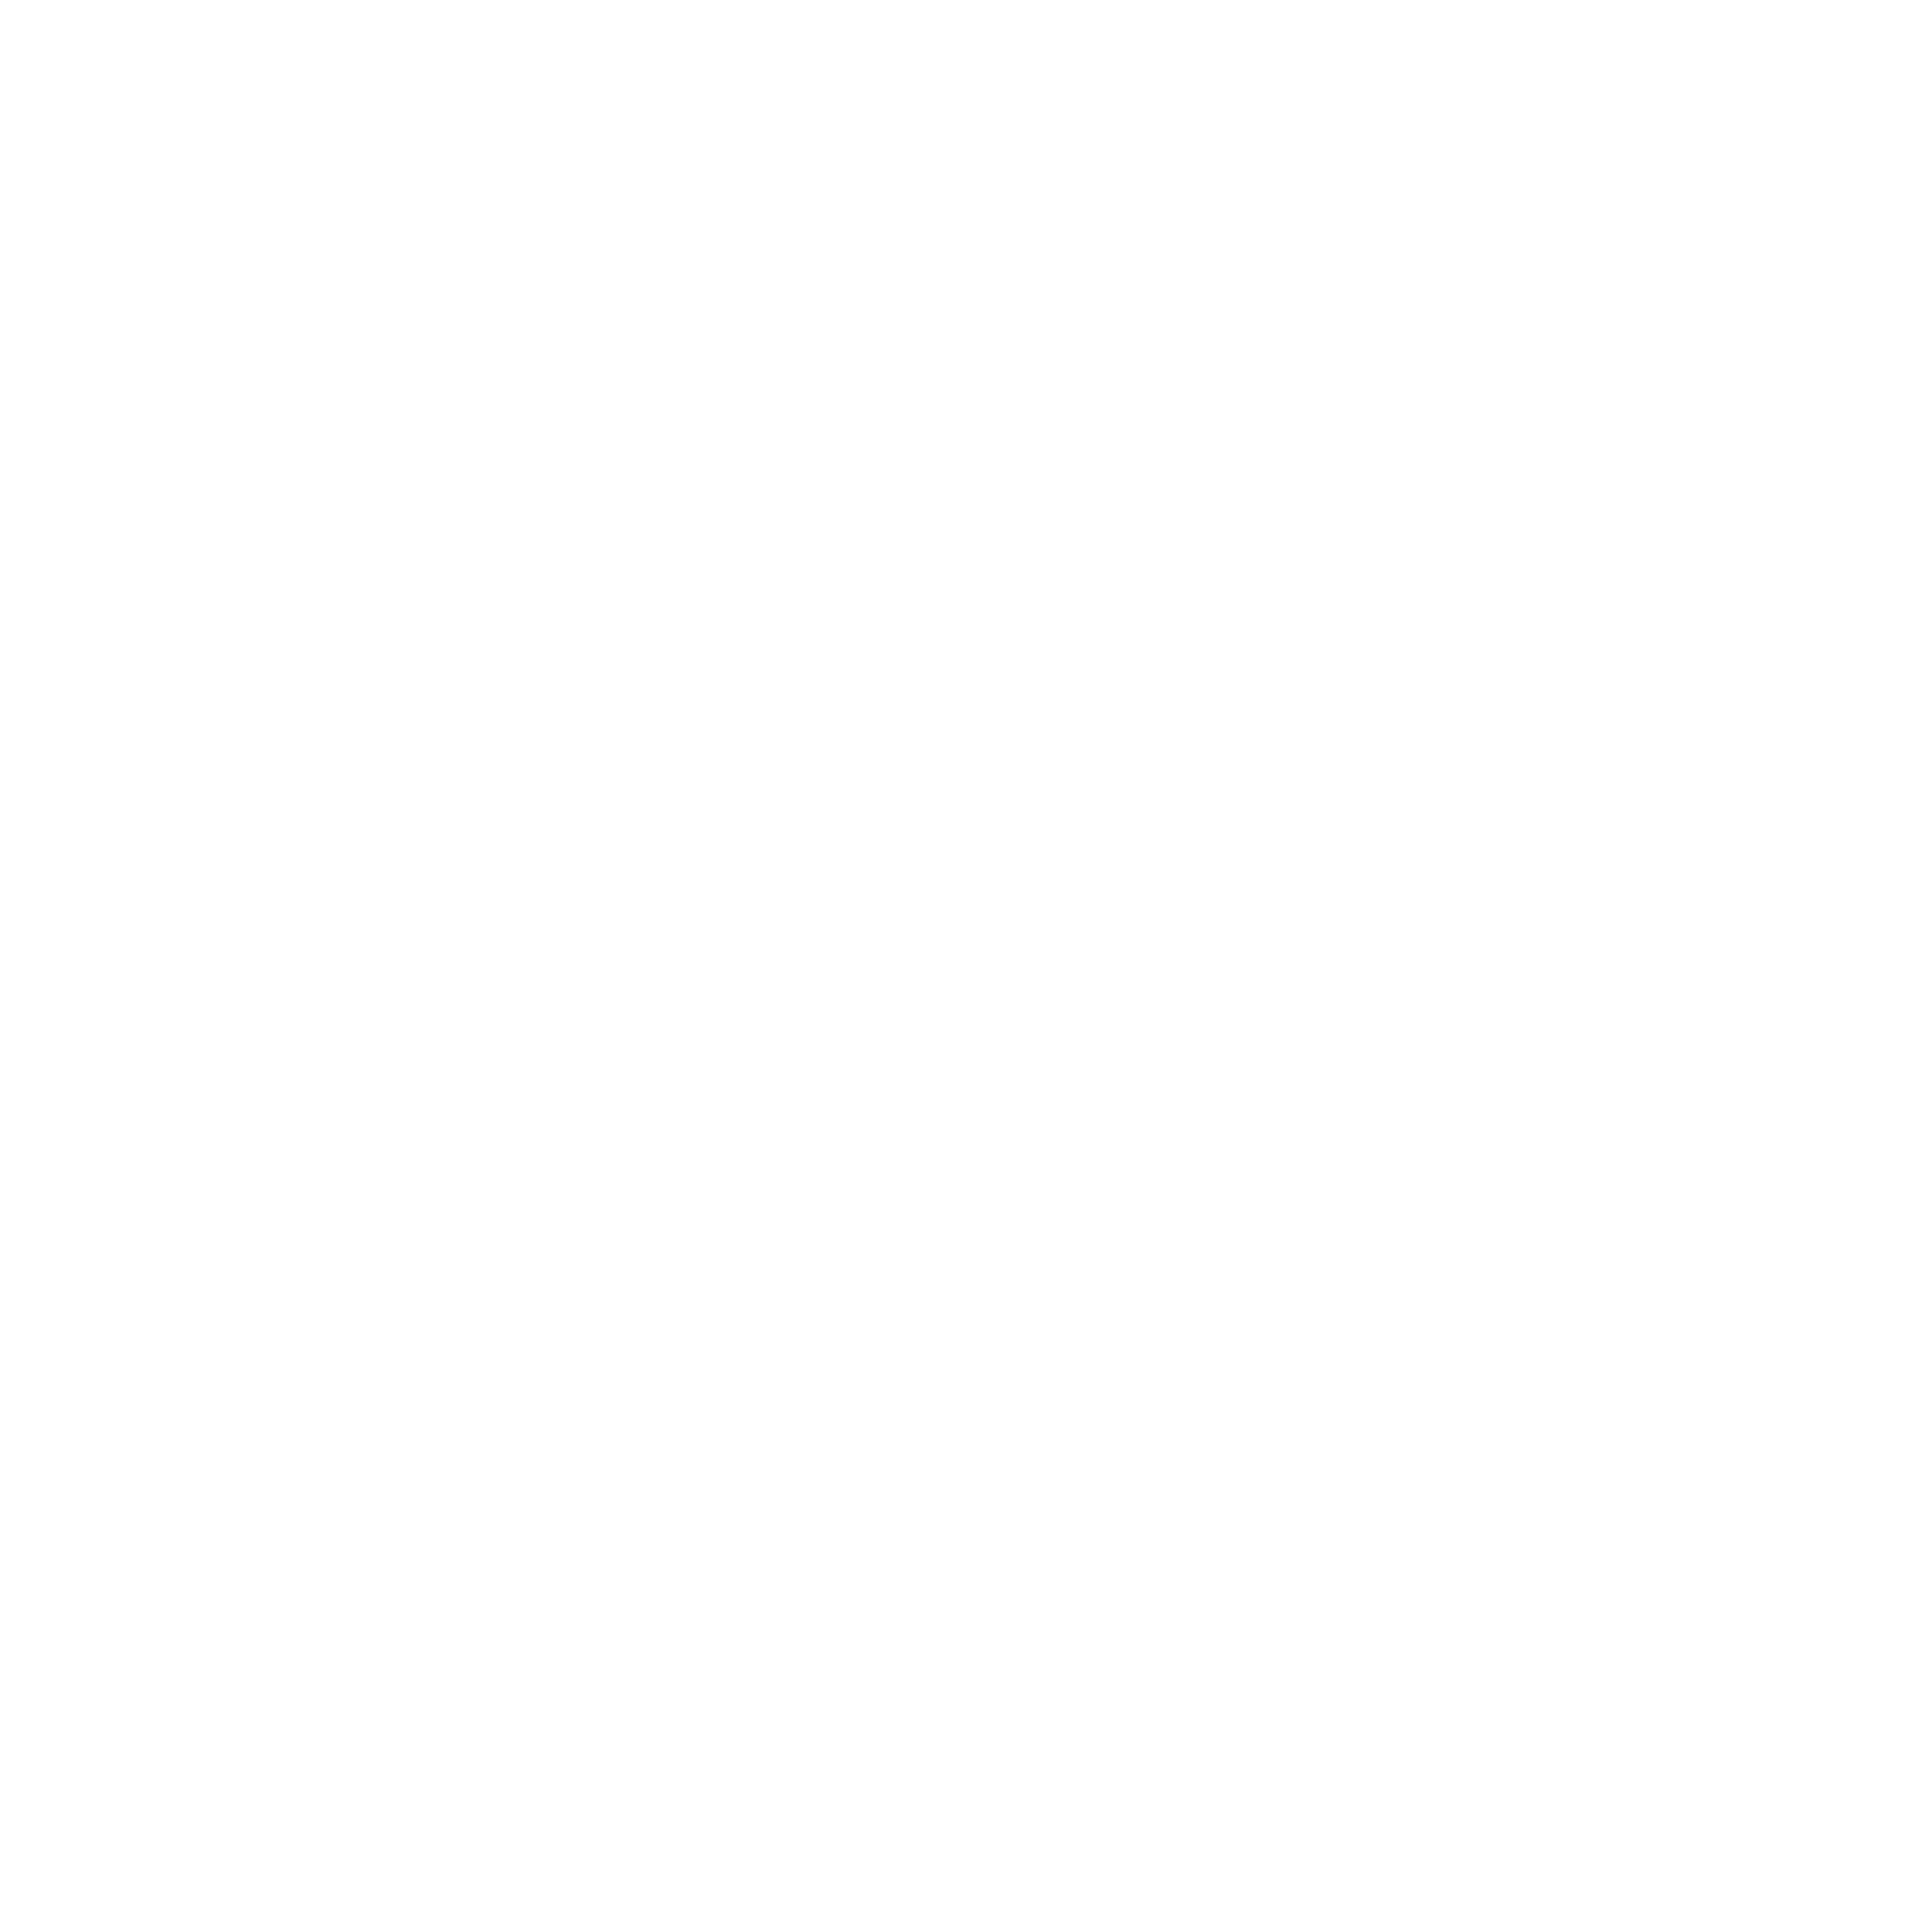 karl-lagerfeld-logo.png